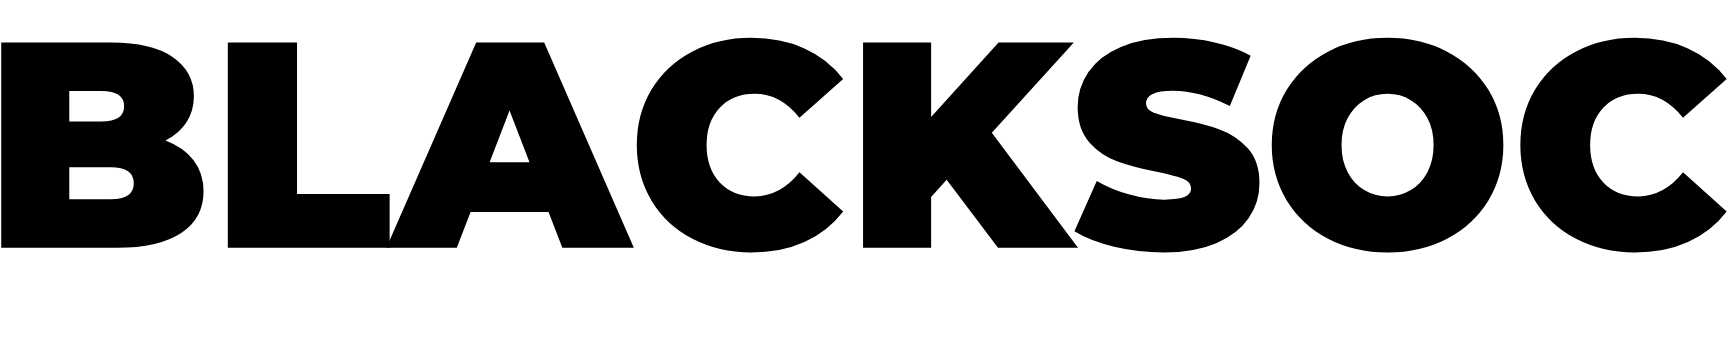 BLACKSOC logo